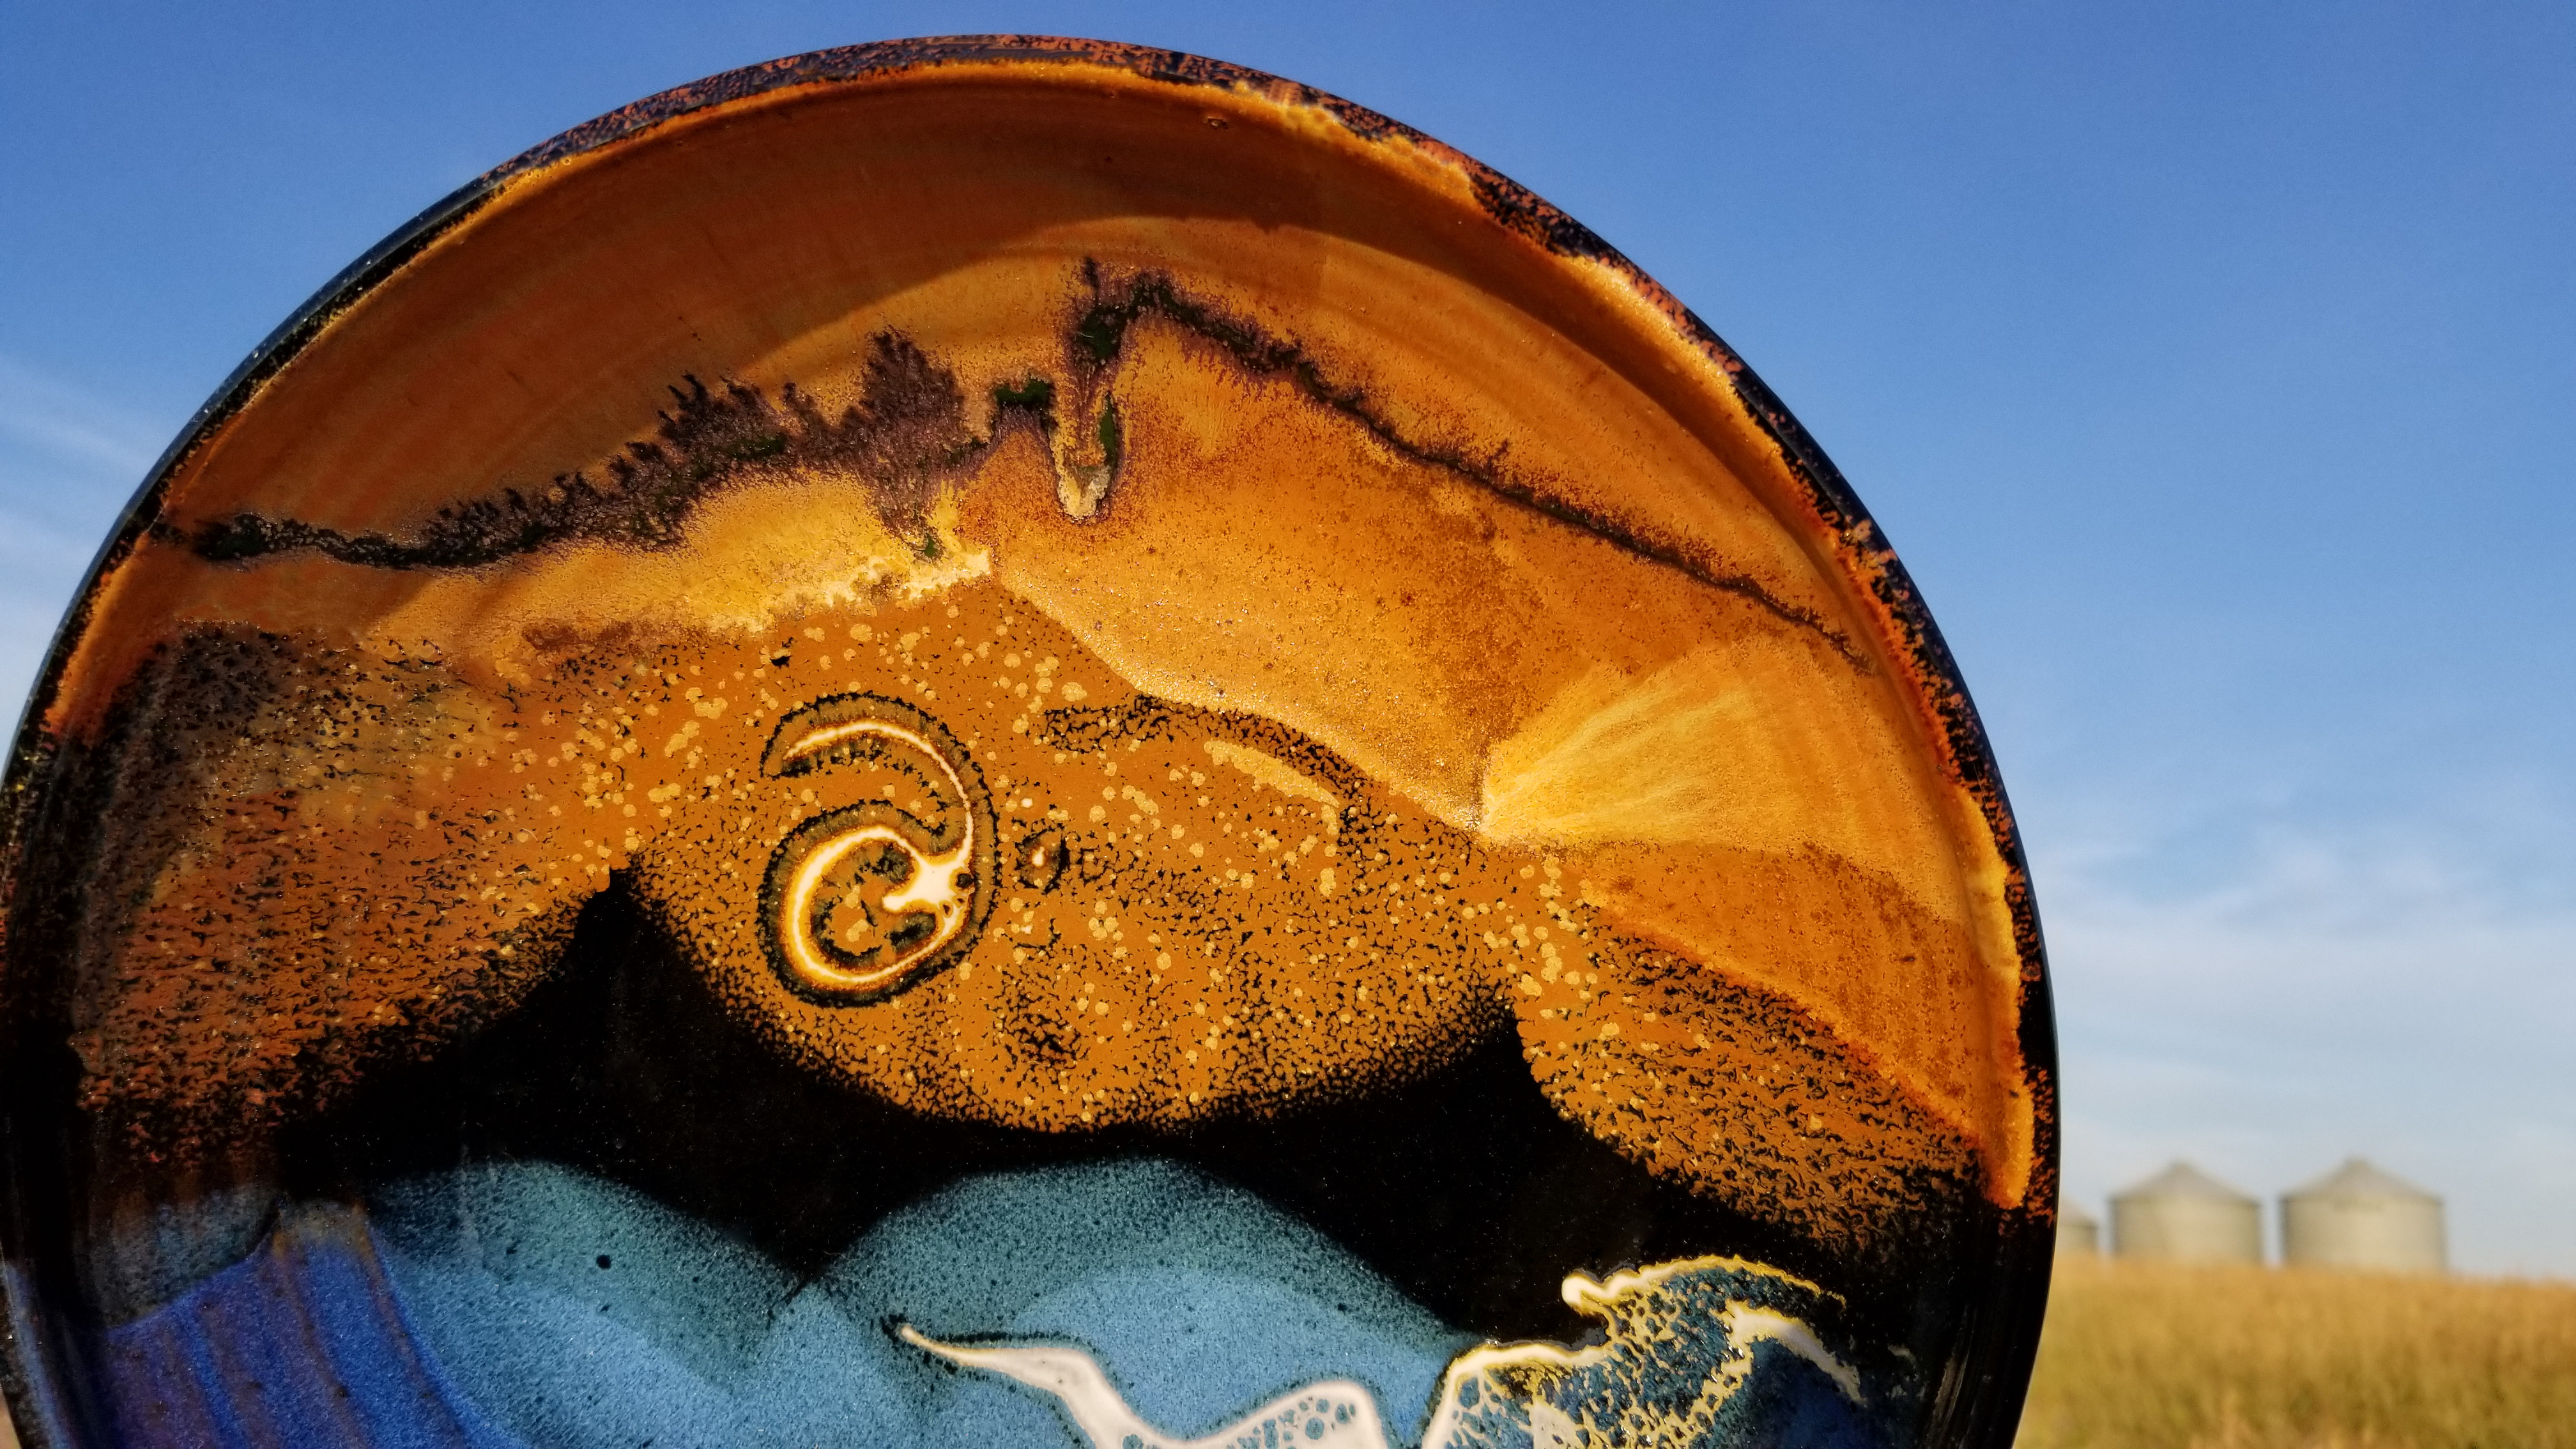 A large platter juxtaposed with grain bins near Beach, North Dakota